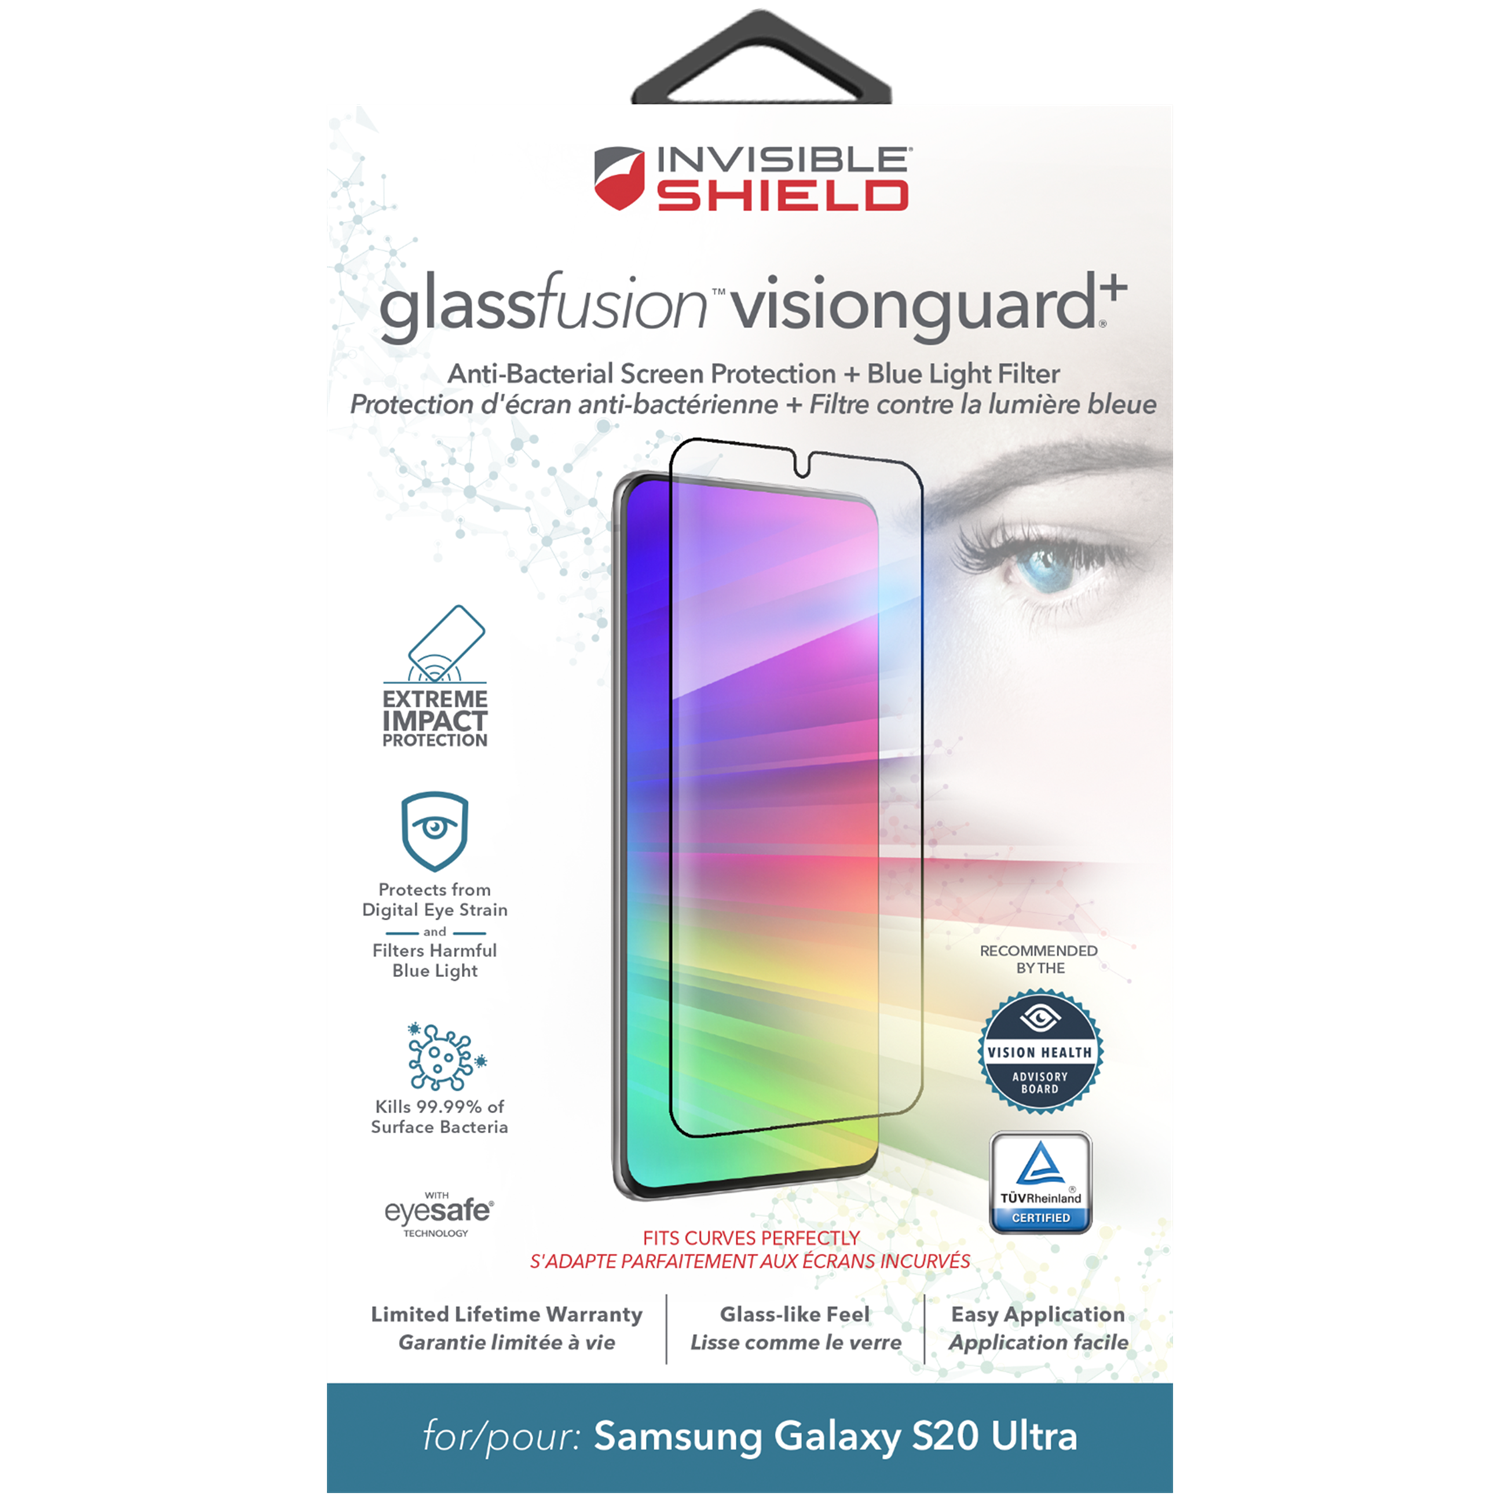 InvisibleShield GlassFusion Visionguard+ Galaxy S20 Ultra